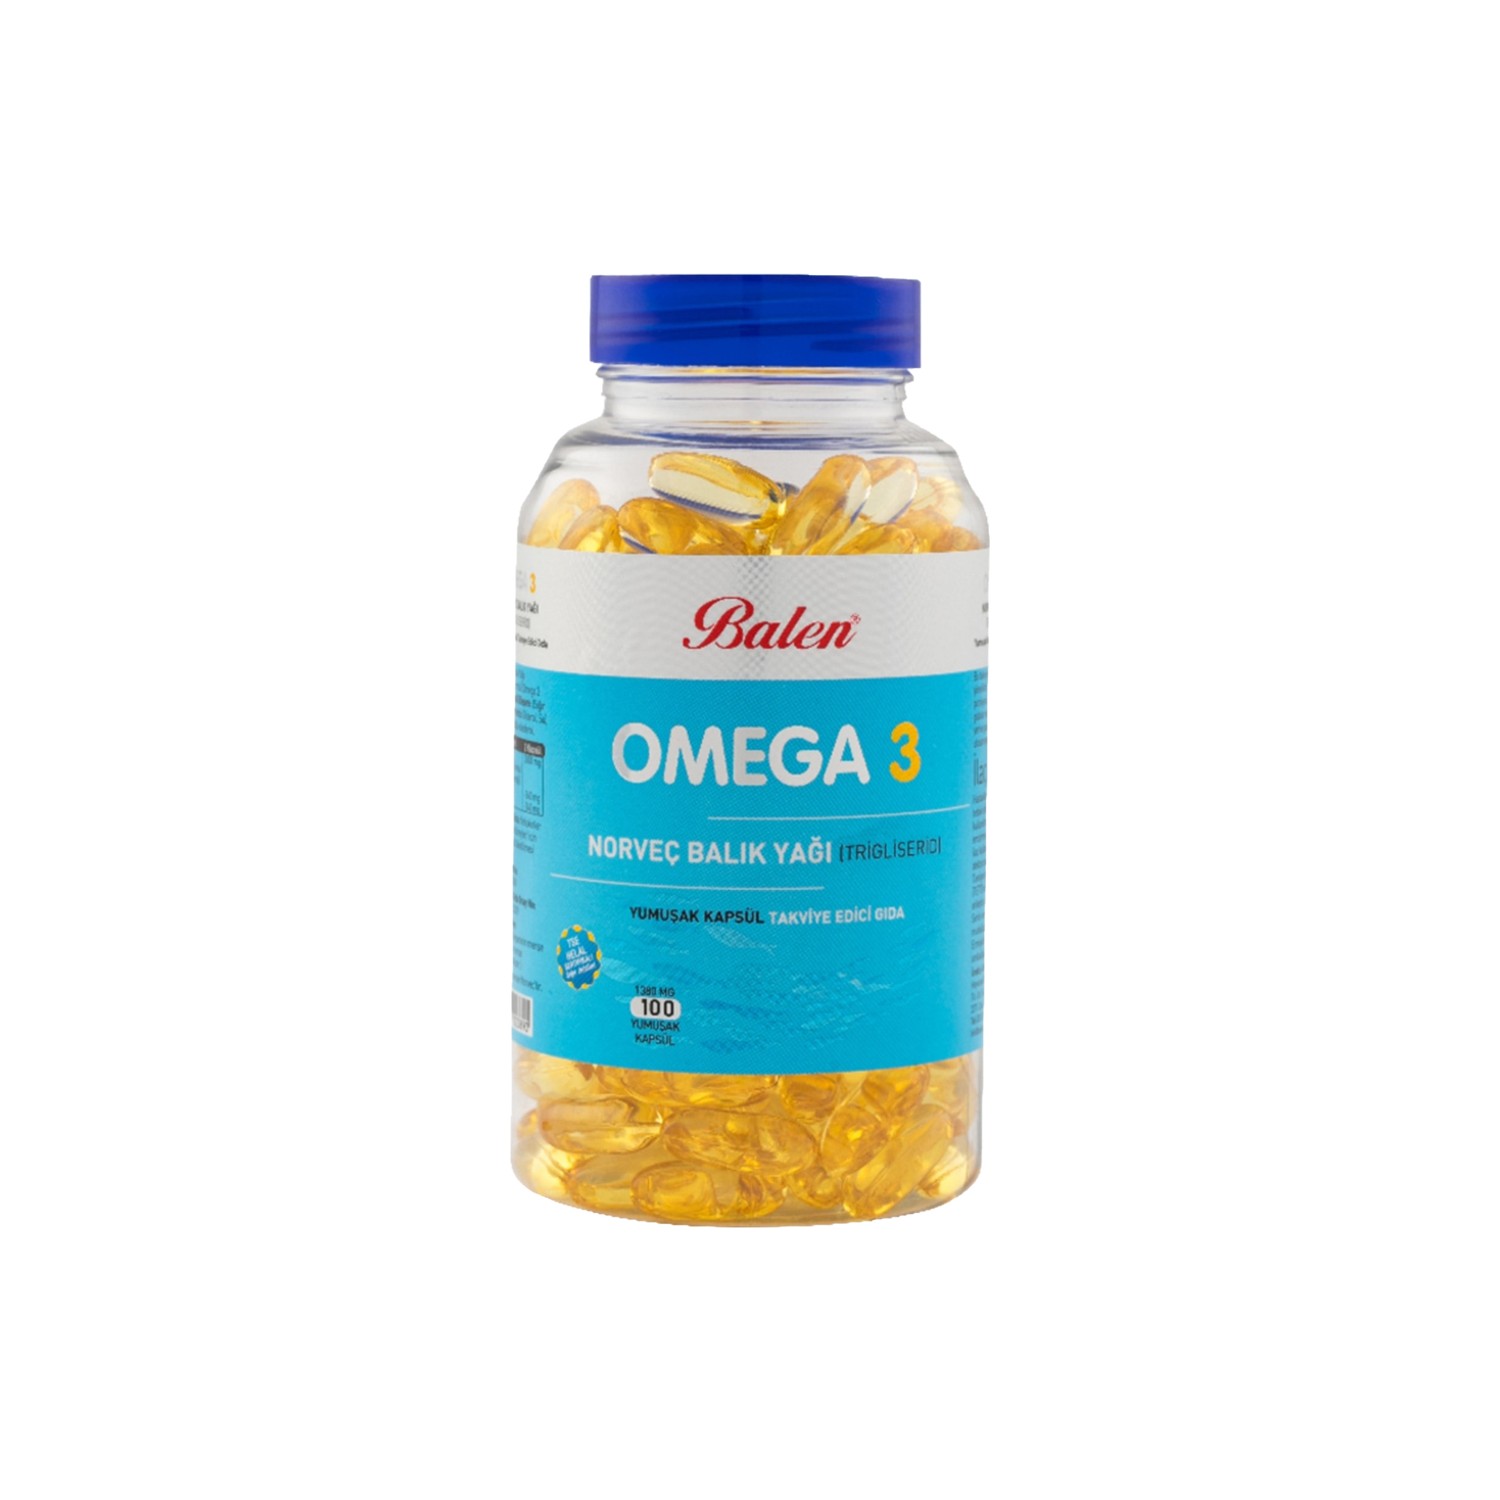 Рыбий жир Balen Omega 3, 100 капсул, 1380 мг норвежский рыбий жир balen omega 3 триглицерид 1380 мг 200 капсул